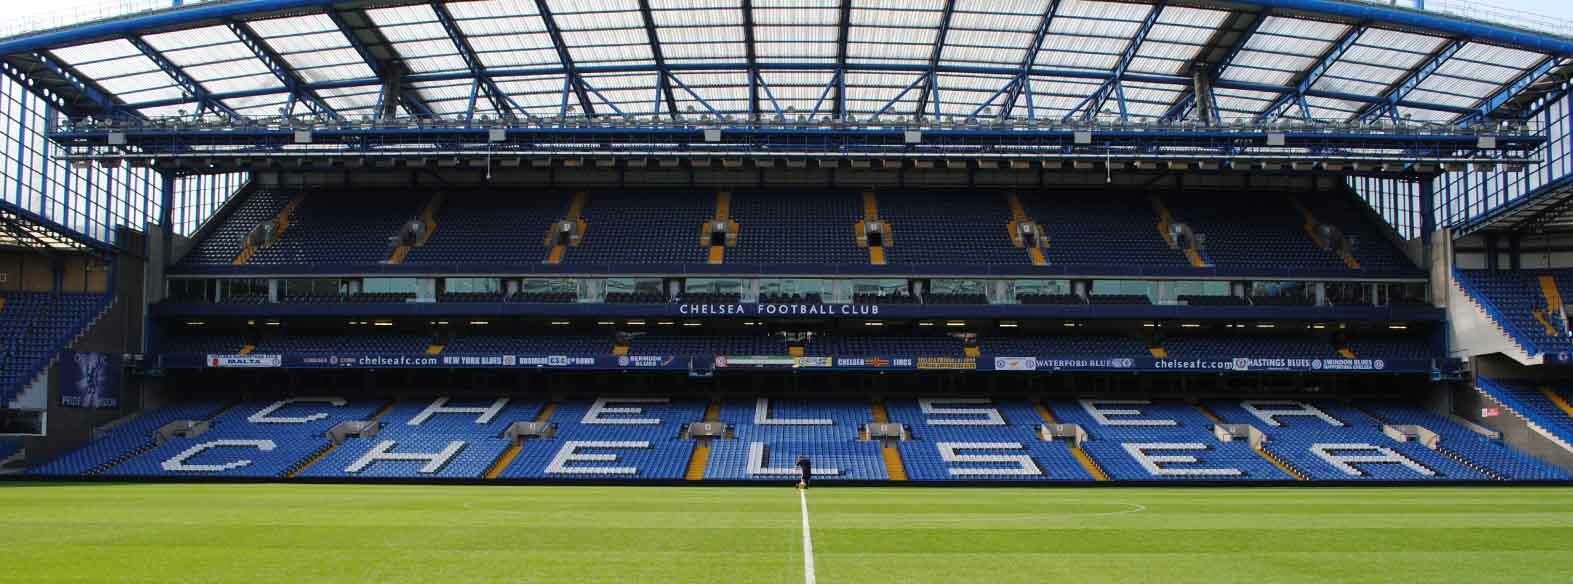 Chelsea FC Stadium Tour: FAQs | The London Pass®